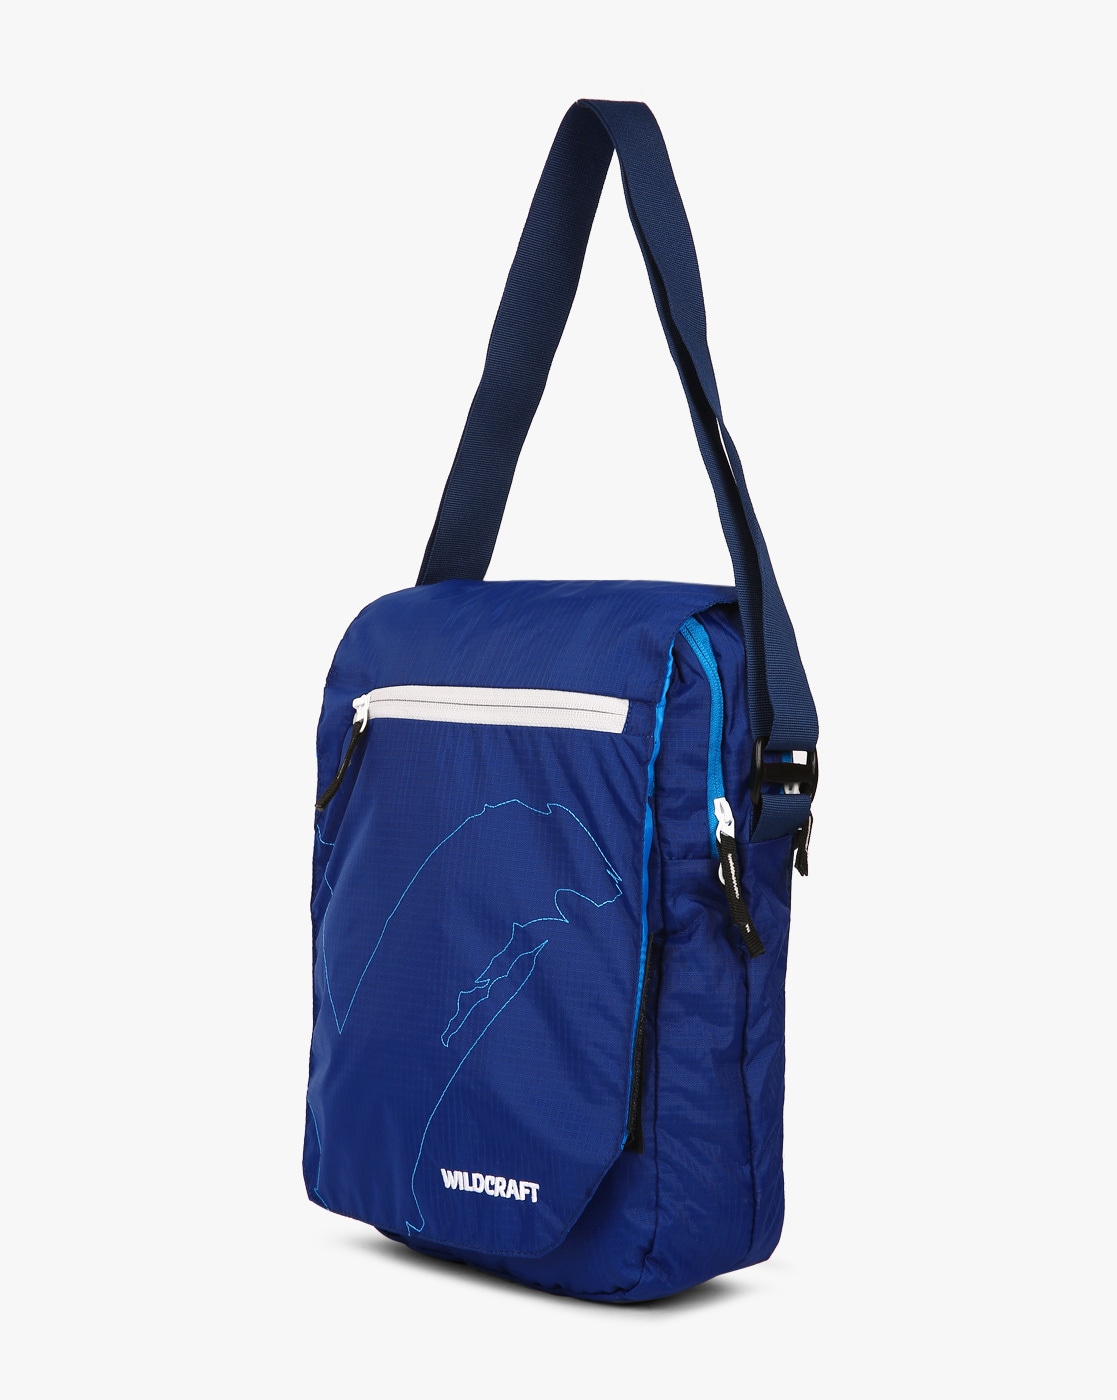 Buy Wiki Satchell Messenger Sling Bag Turquoise Online | Wildcraft